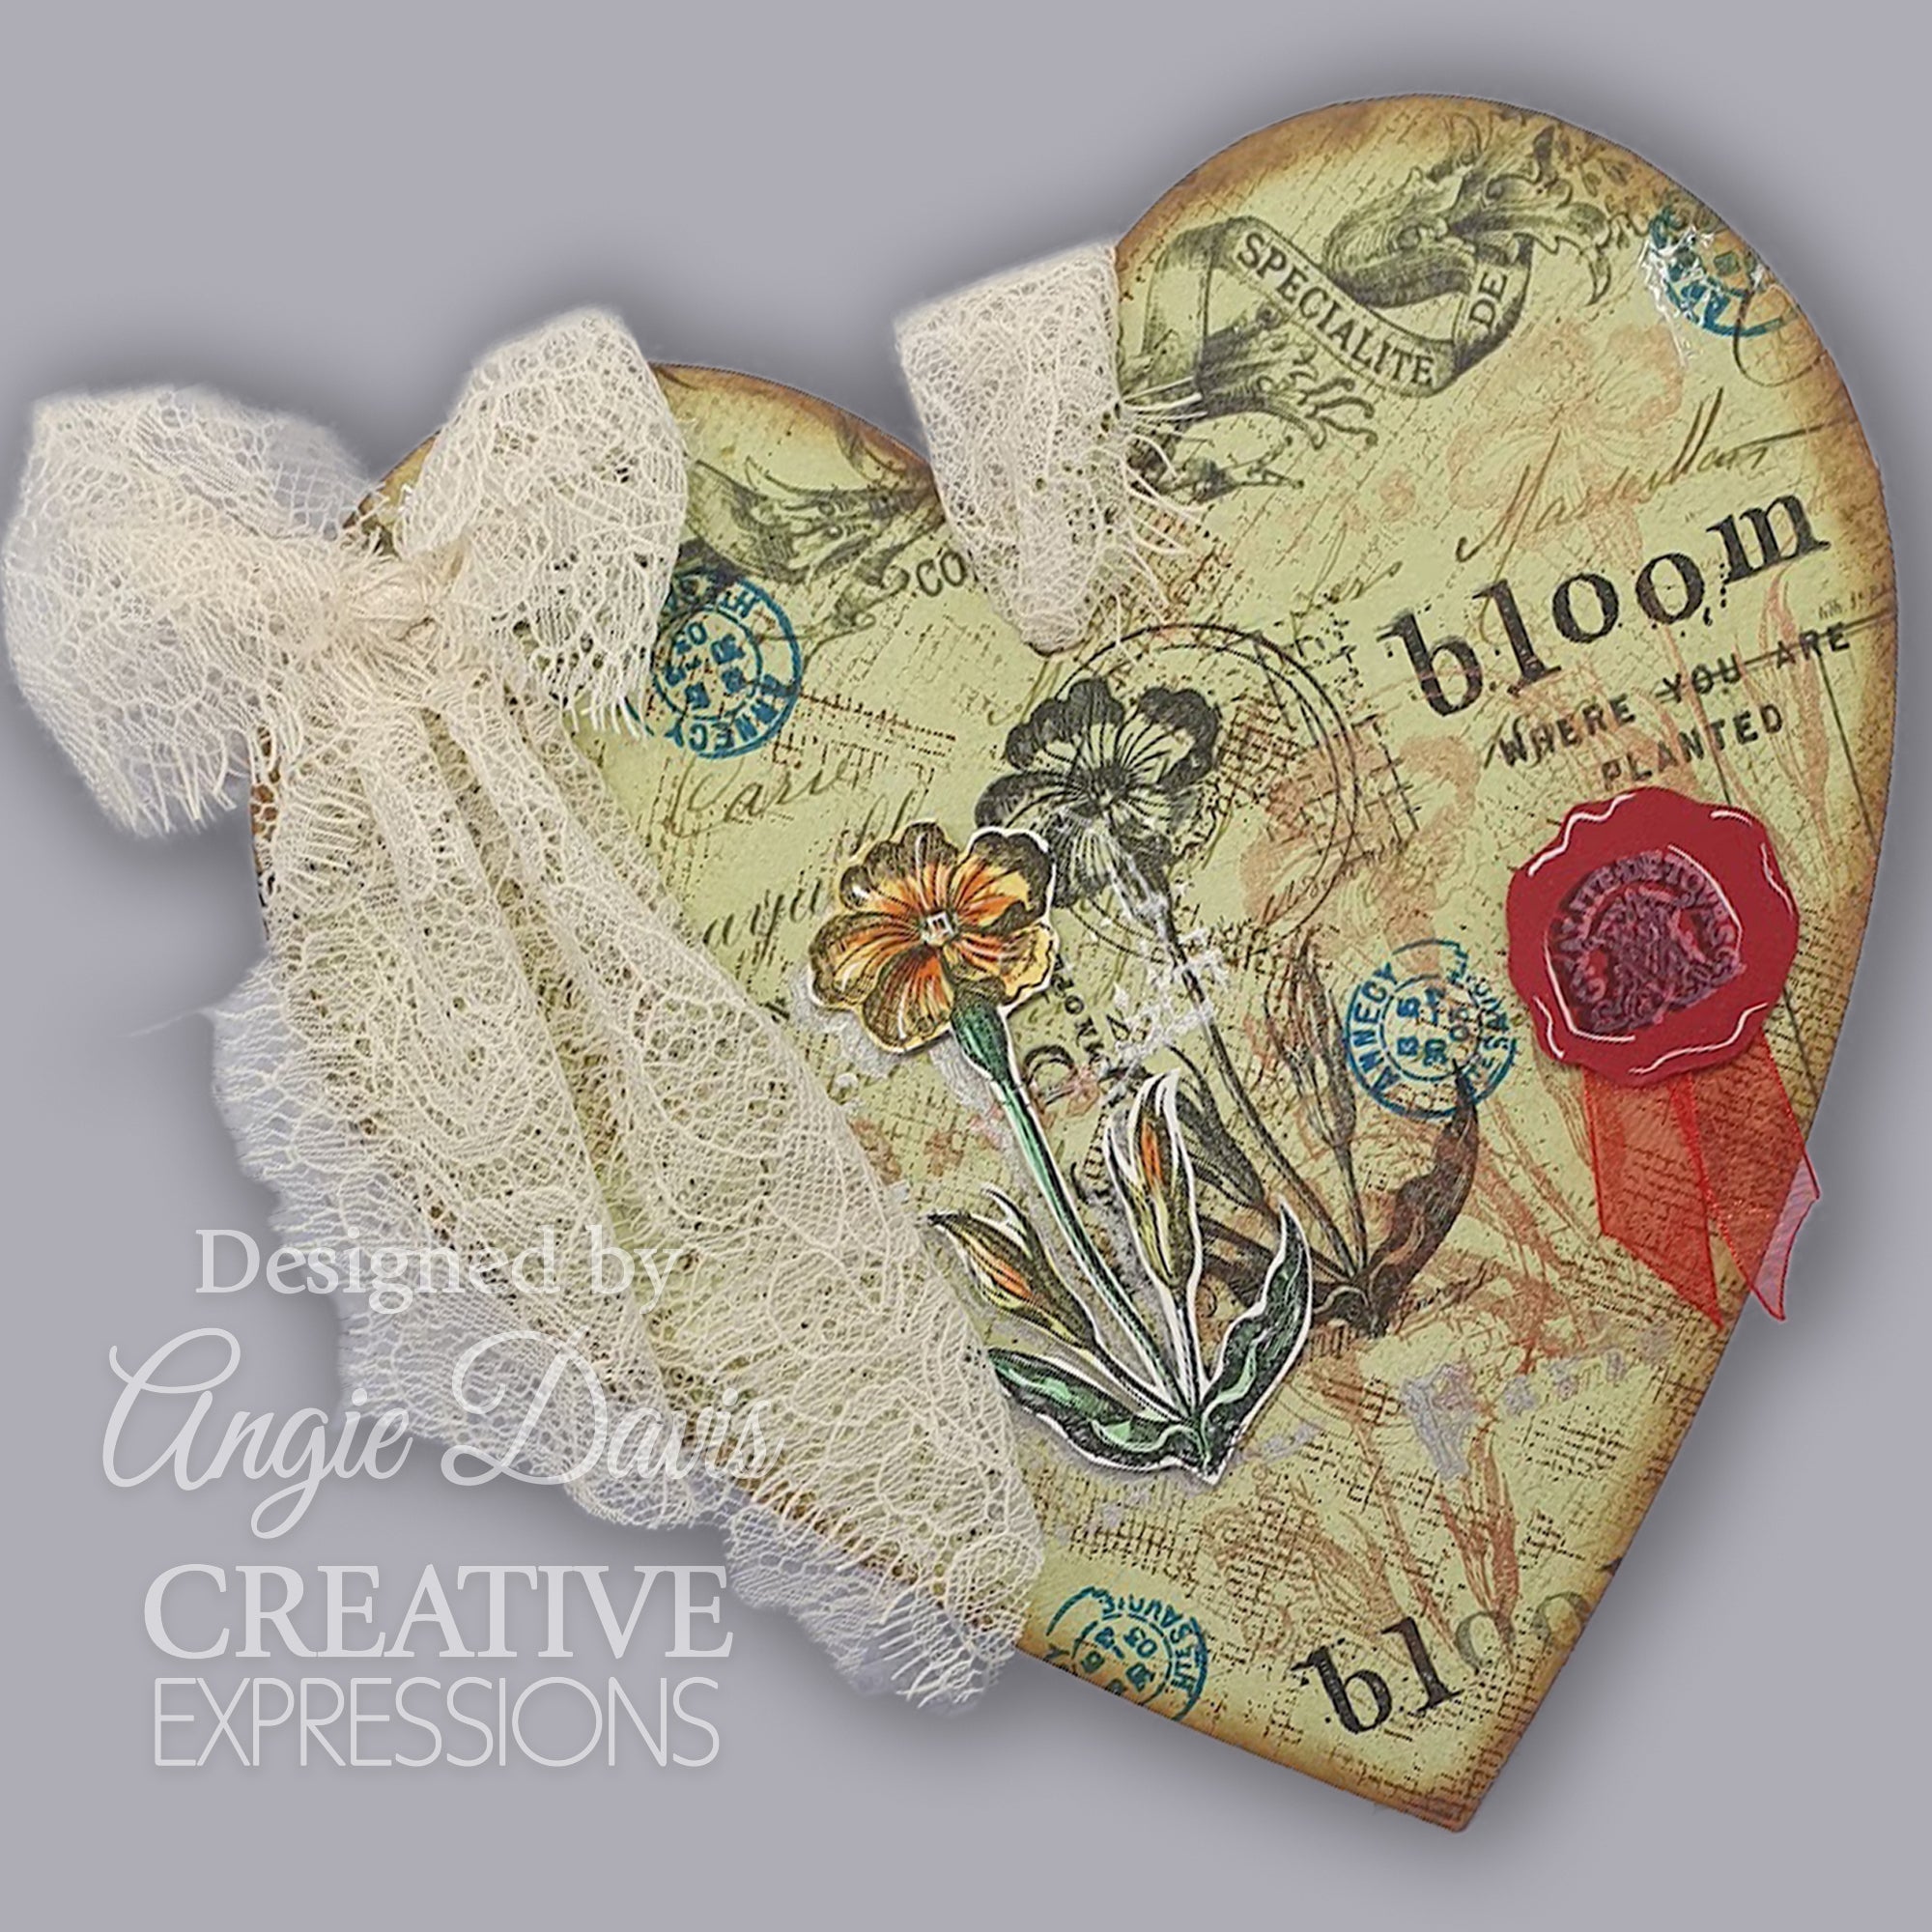 Creative Expressions Sam Poole Texture 4 in x 6 in Pre Cut Rubber Stamp